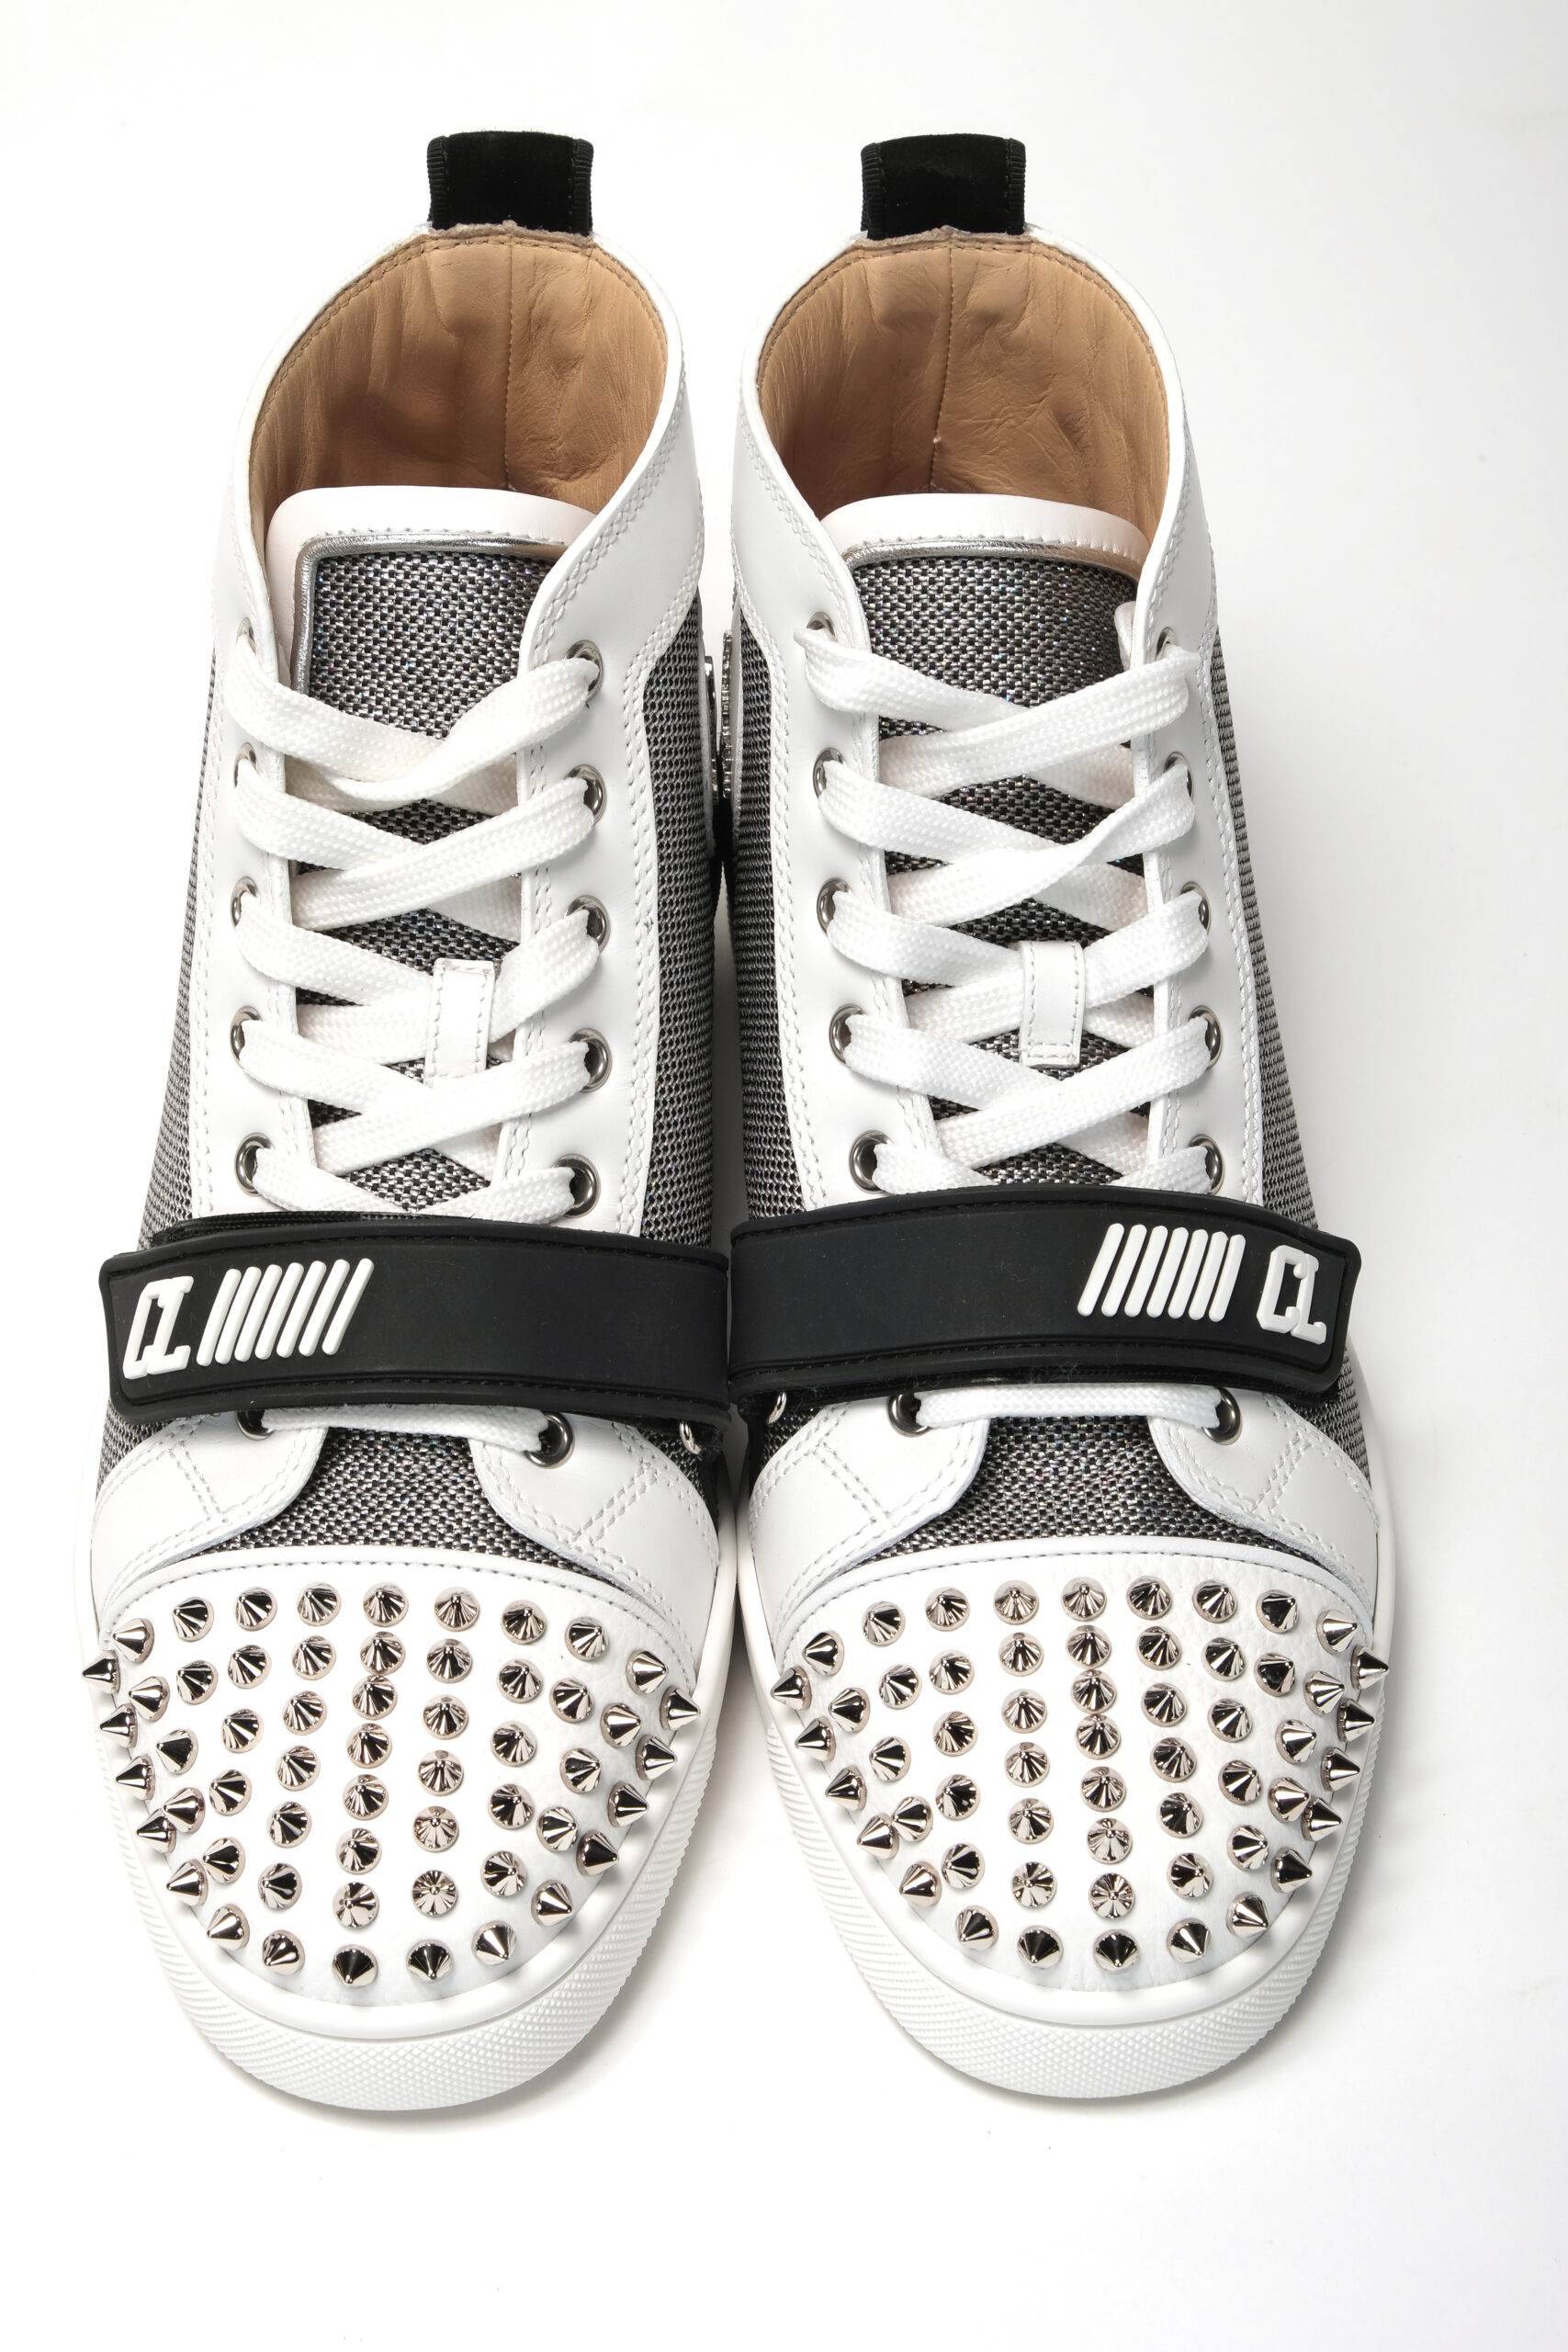 Christian Louboutin Women's "Lou Spikes" Fashion Sneakers  Shoes US 9.5 IT 39.5